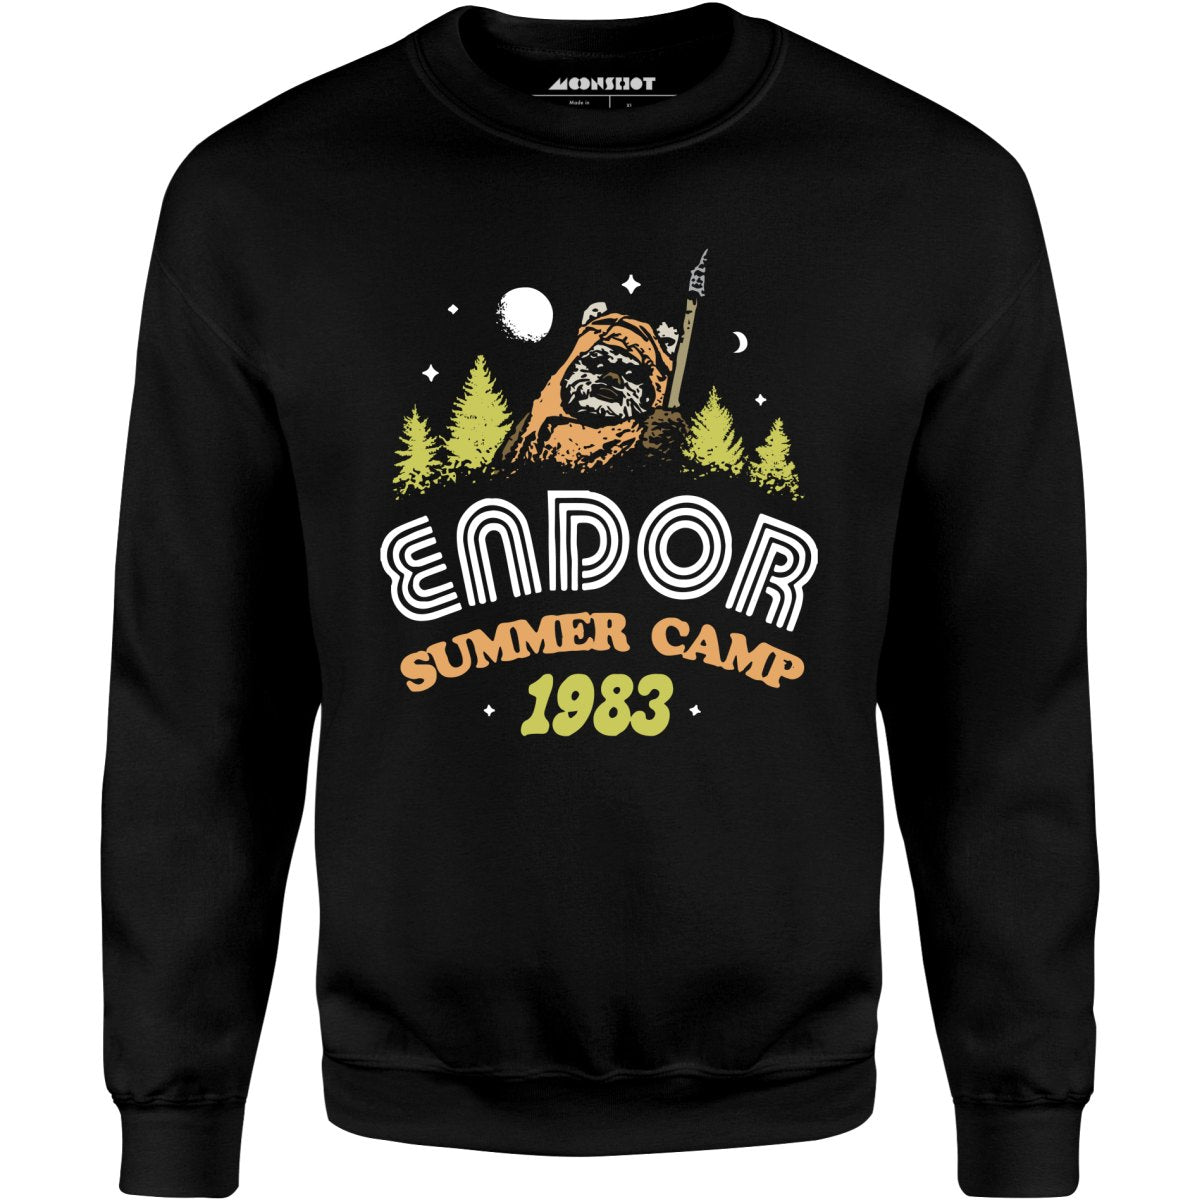 Endor Summer Camp - Unisex Sweatshirt